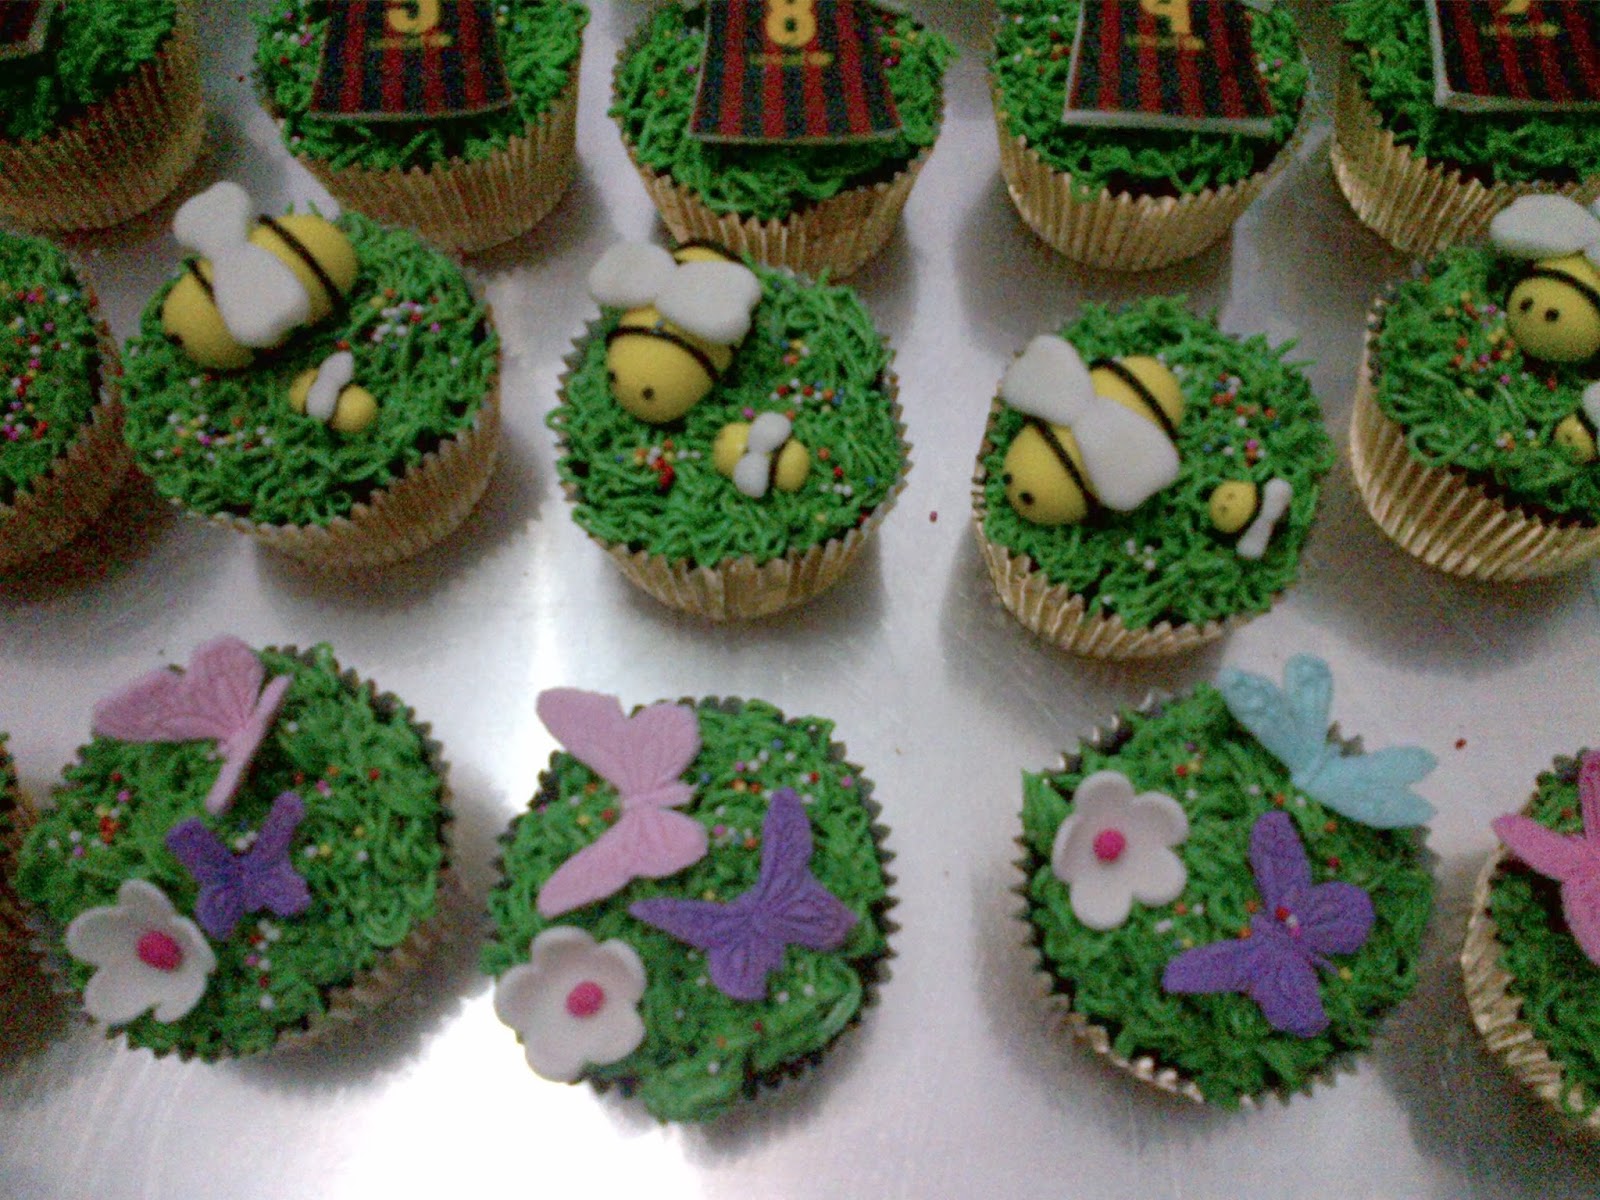 Cupcakes by Chocoholic Cupcakes Tema Taman dan Baju Bola 